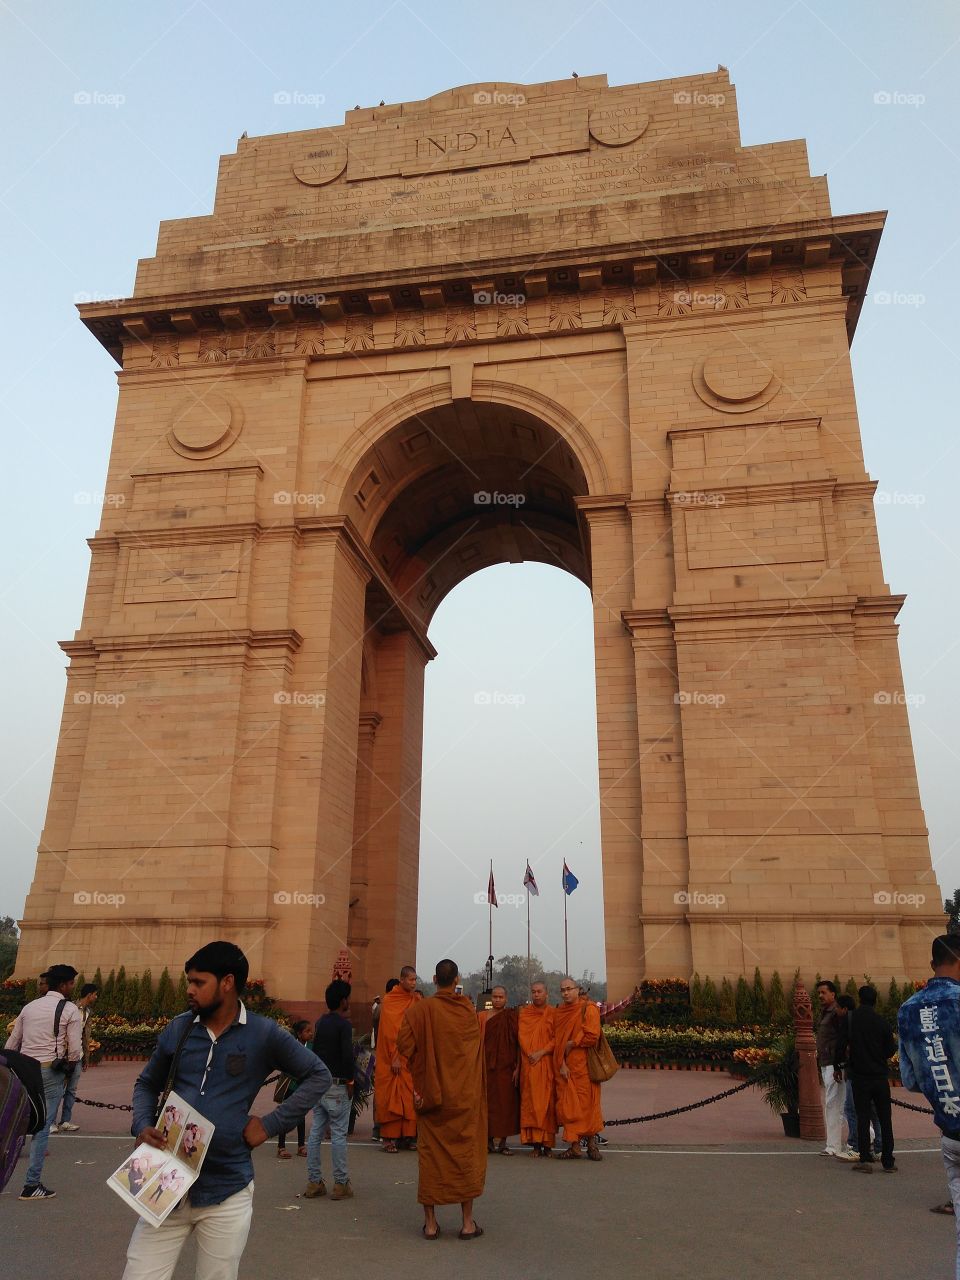 India gate in Delhi